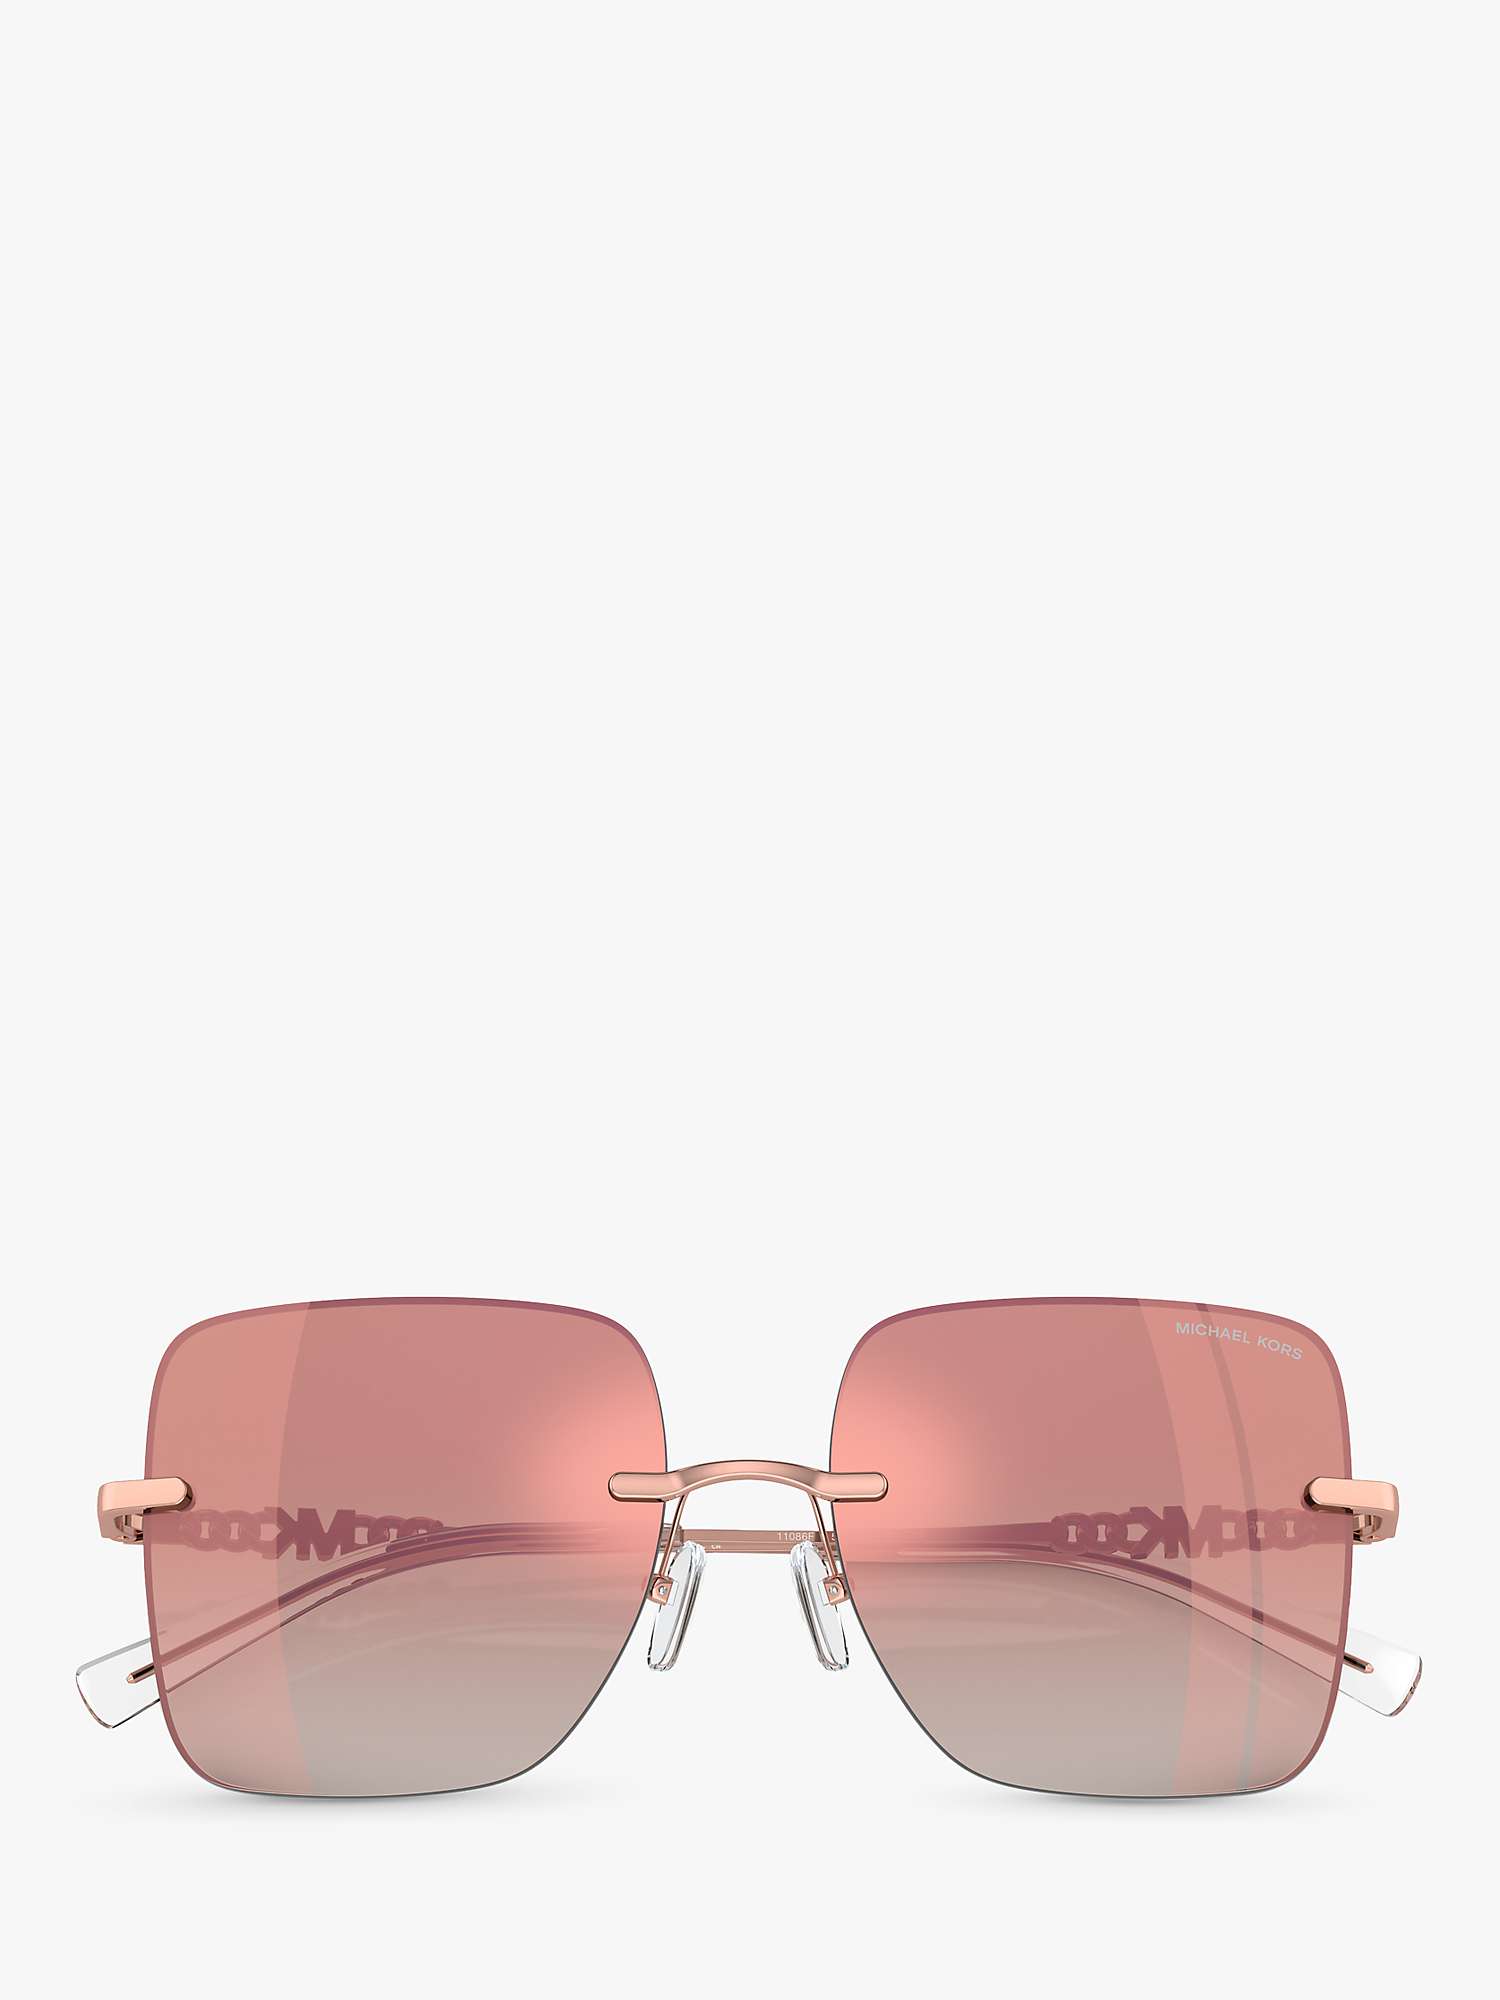 Buy Michael Kors MK1150 Women's Quebec Pillow Sunglasses, Rose Gold/Pink Gradient Online at johnlewis.com